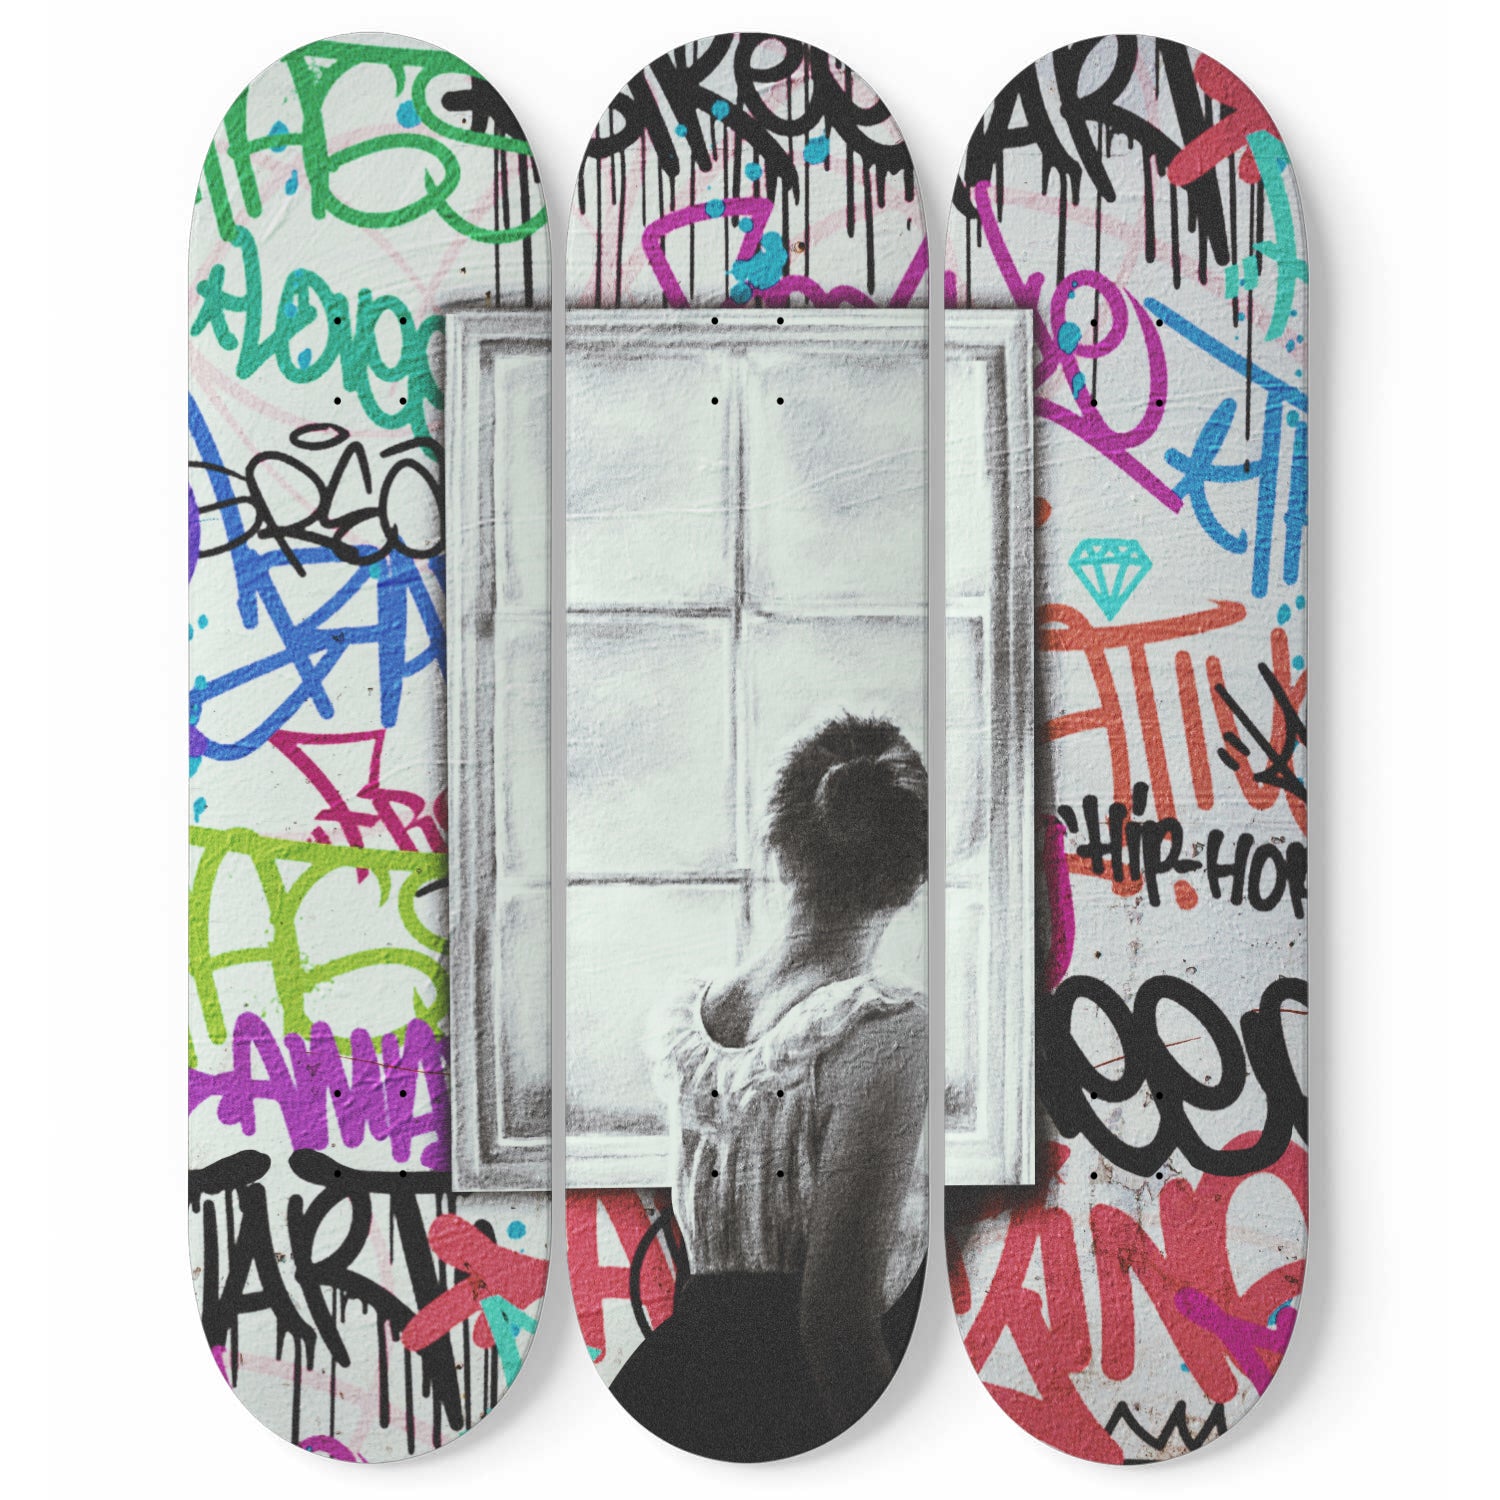 Banksy Woman Window Edge Wall Art | 3 - Piece Skateboard Wall Art, Graffiti Pop Art, Pro-Grade Maple wood Wall Hanging Art